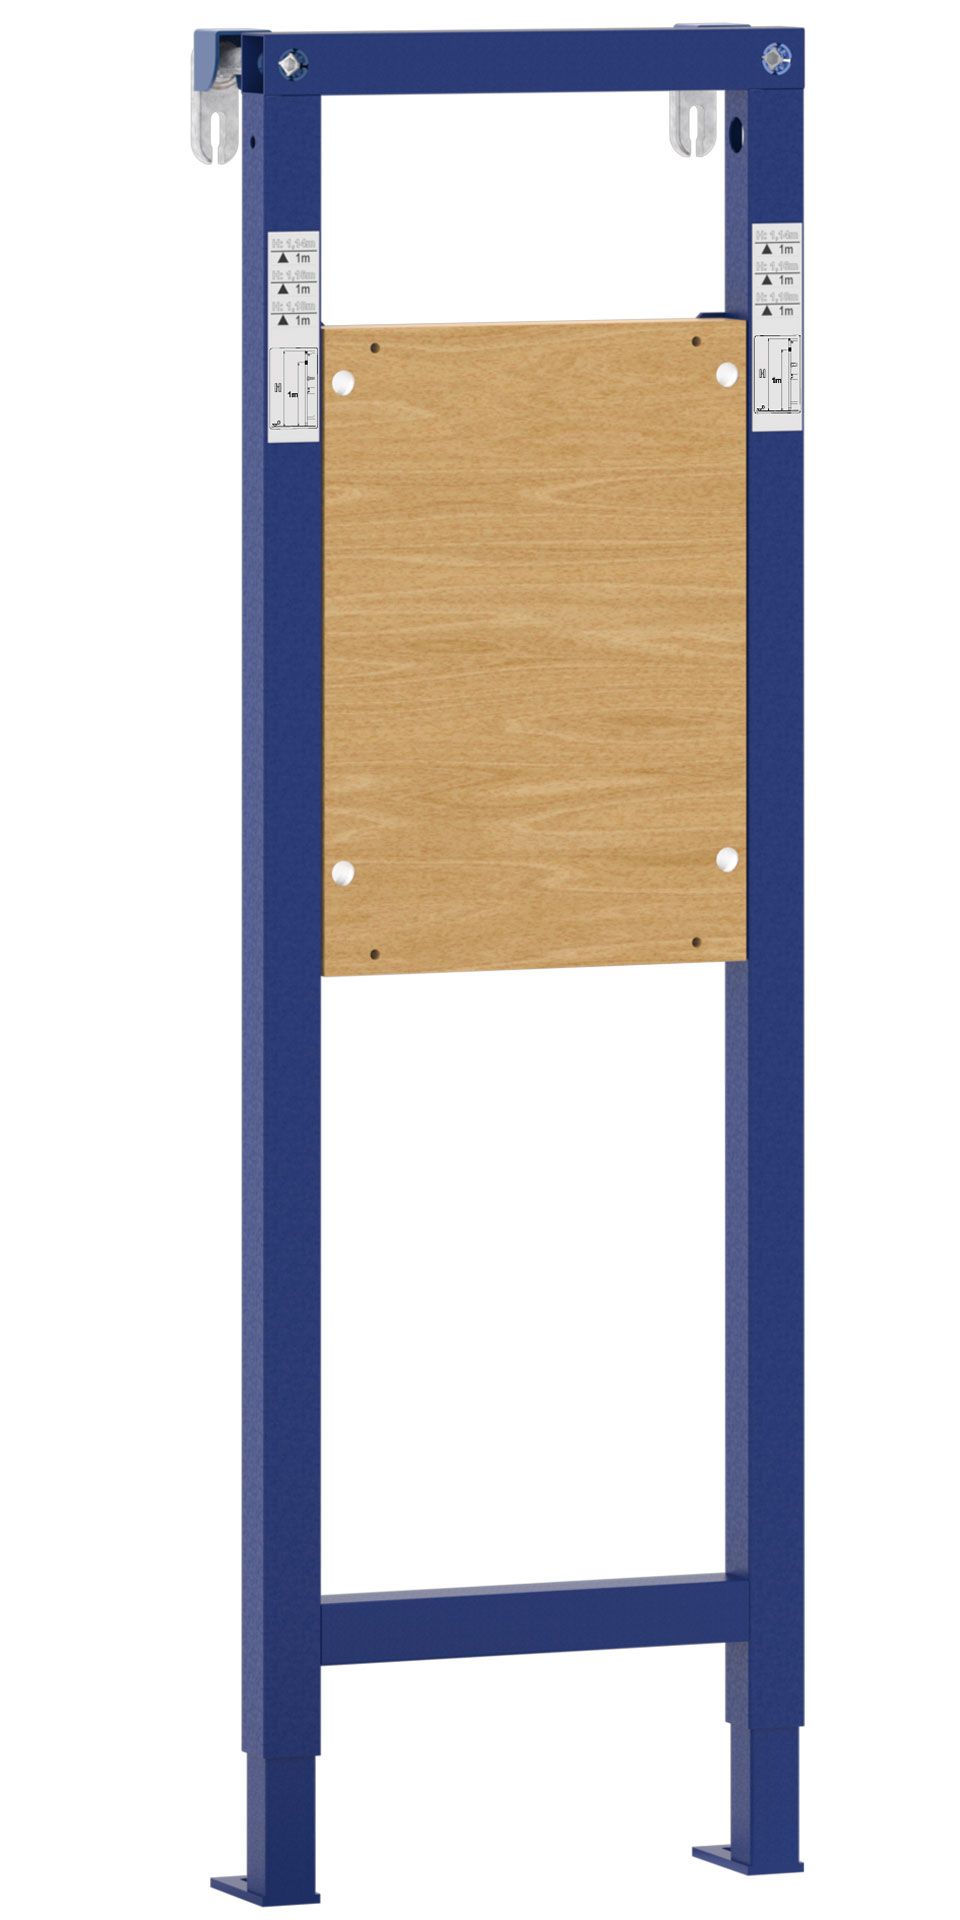 Support frame for bars/urinal panels 380